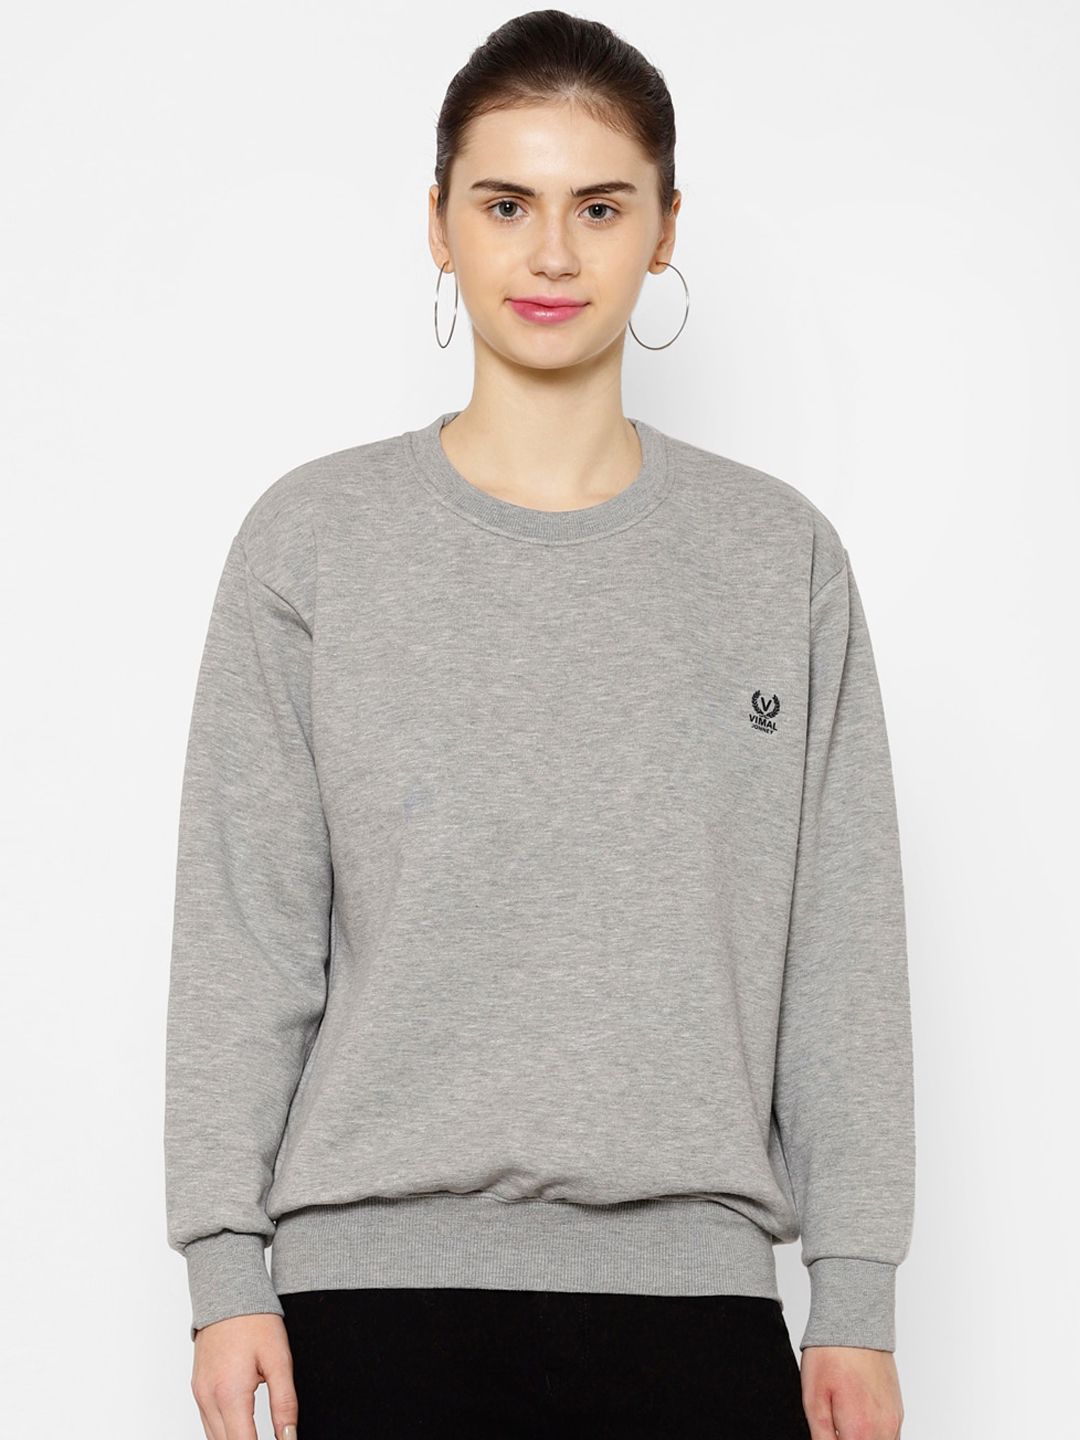 VIMAL JONNEY Women Grey Solid Sweatshirt Price in India